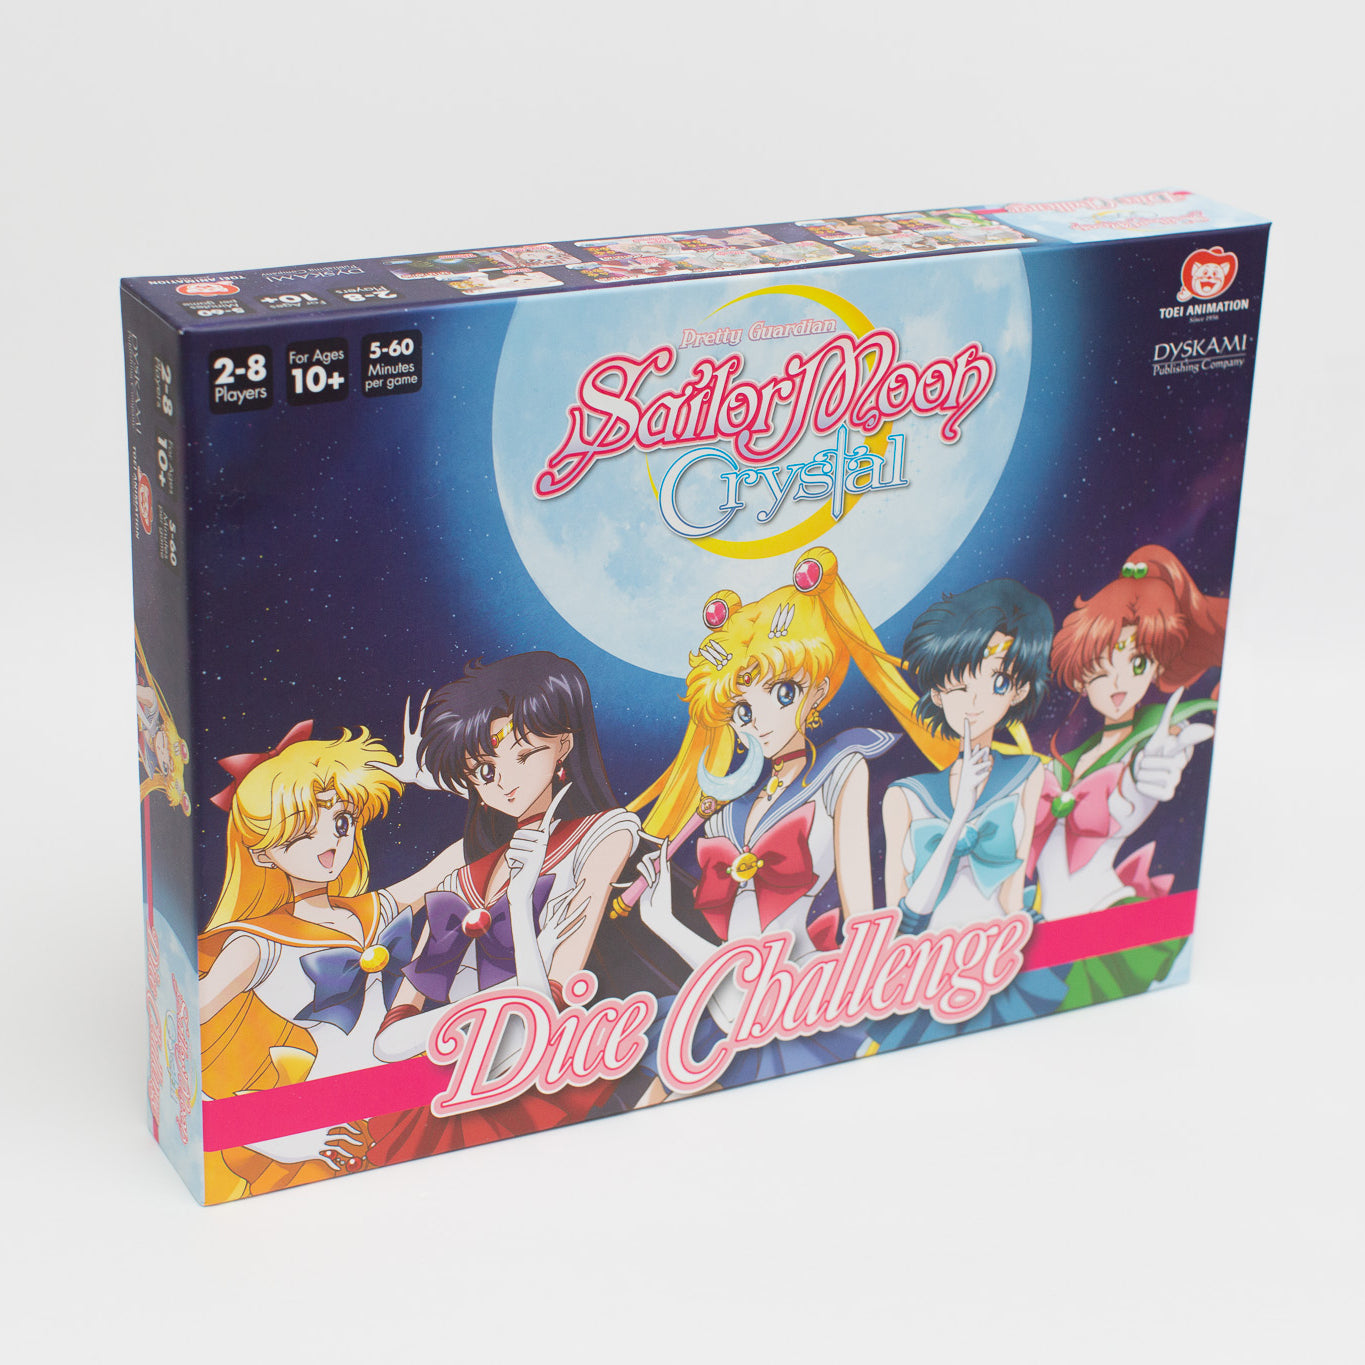 Sailor Moon Dice Challenge Base Game